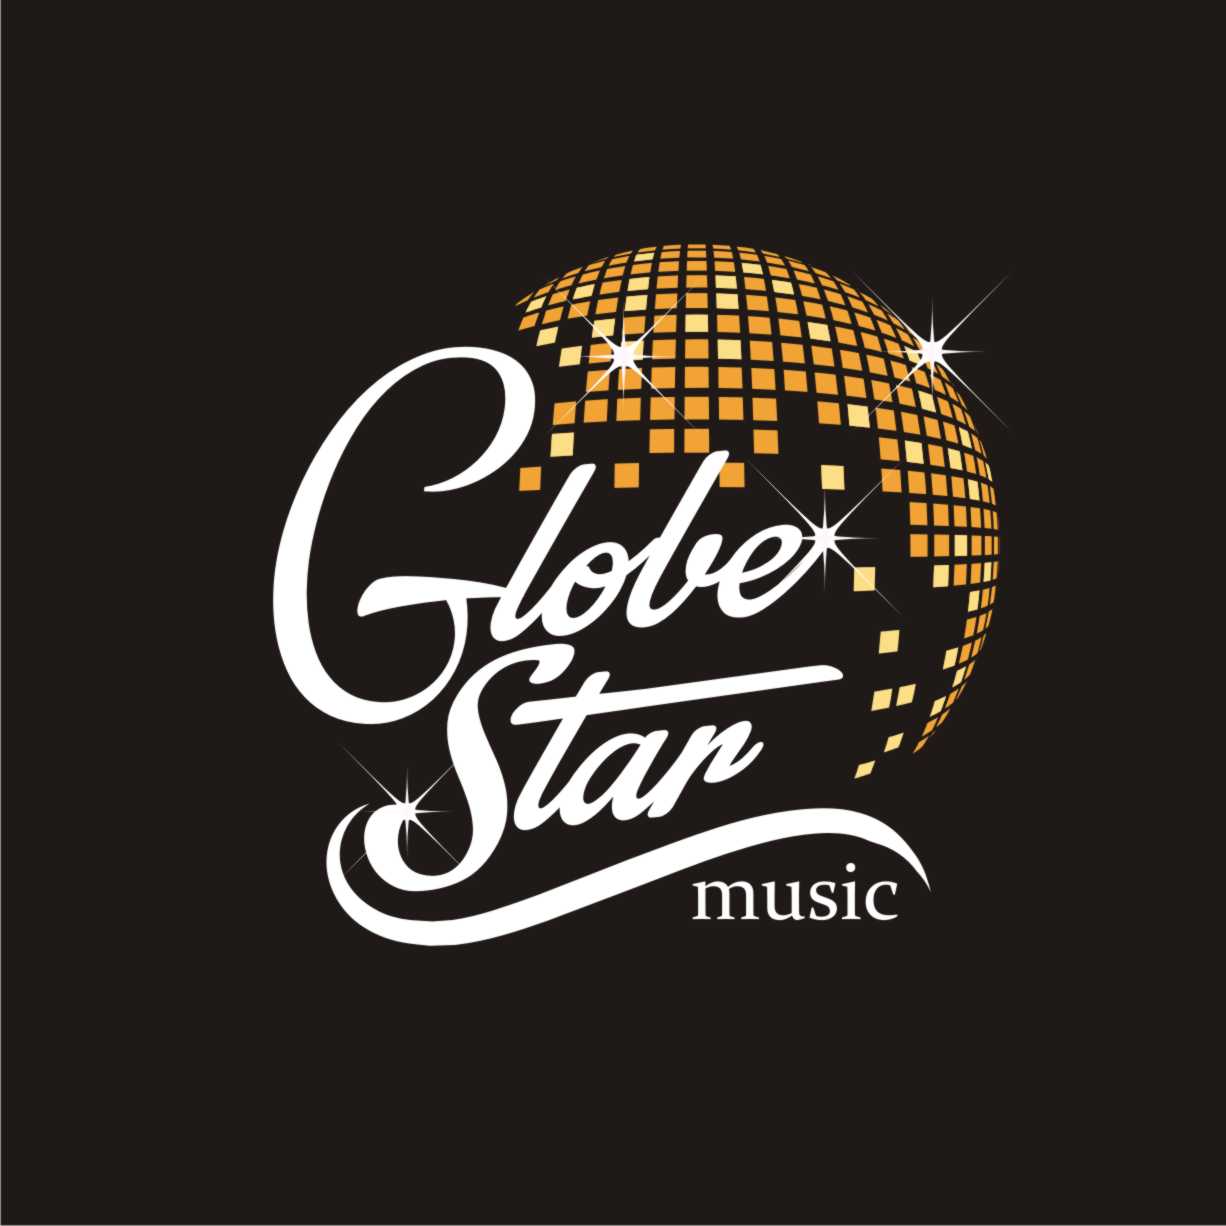 Star Globe Logo - Club Logo Design for Globe Star Music by joshgraph. Design